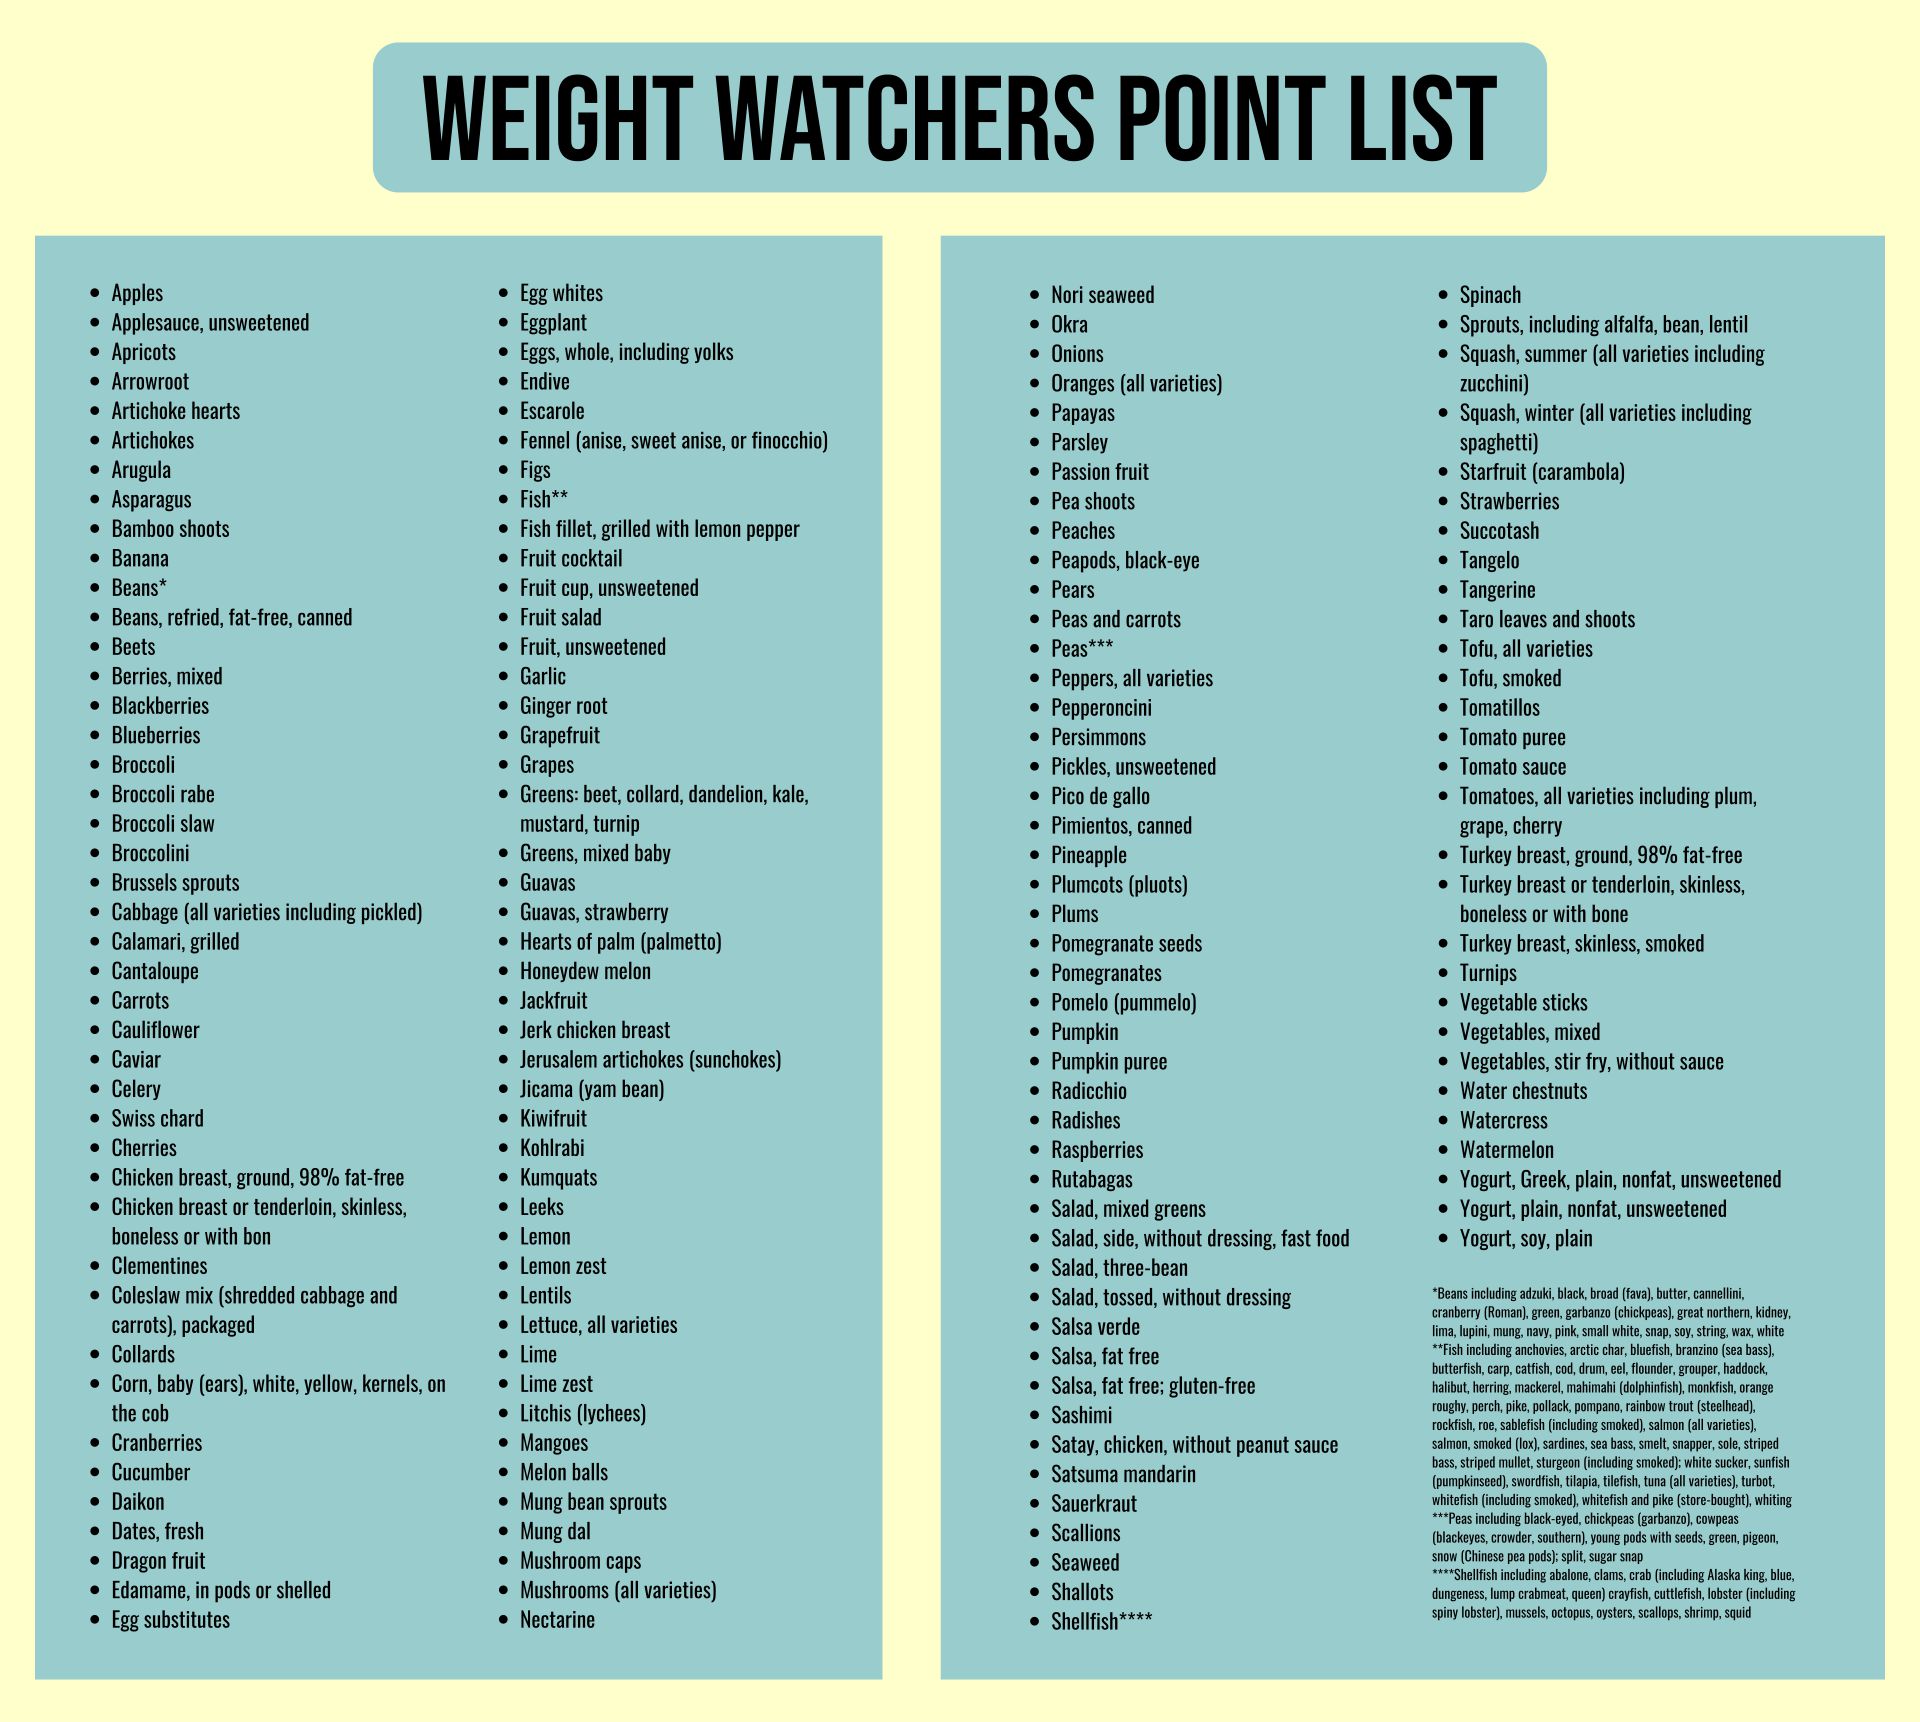 Weight watchers o point list